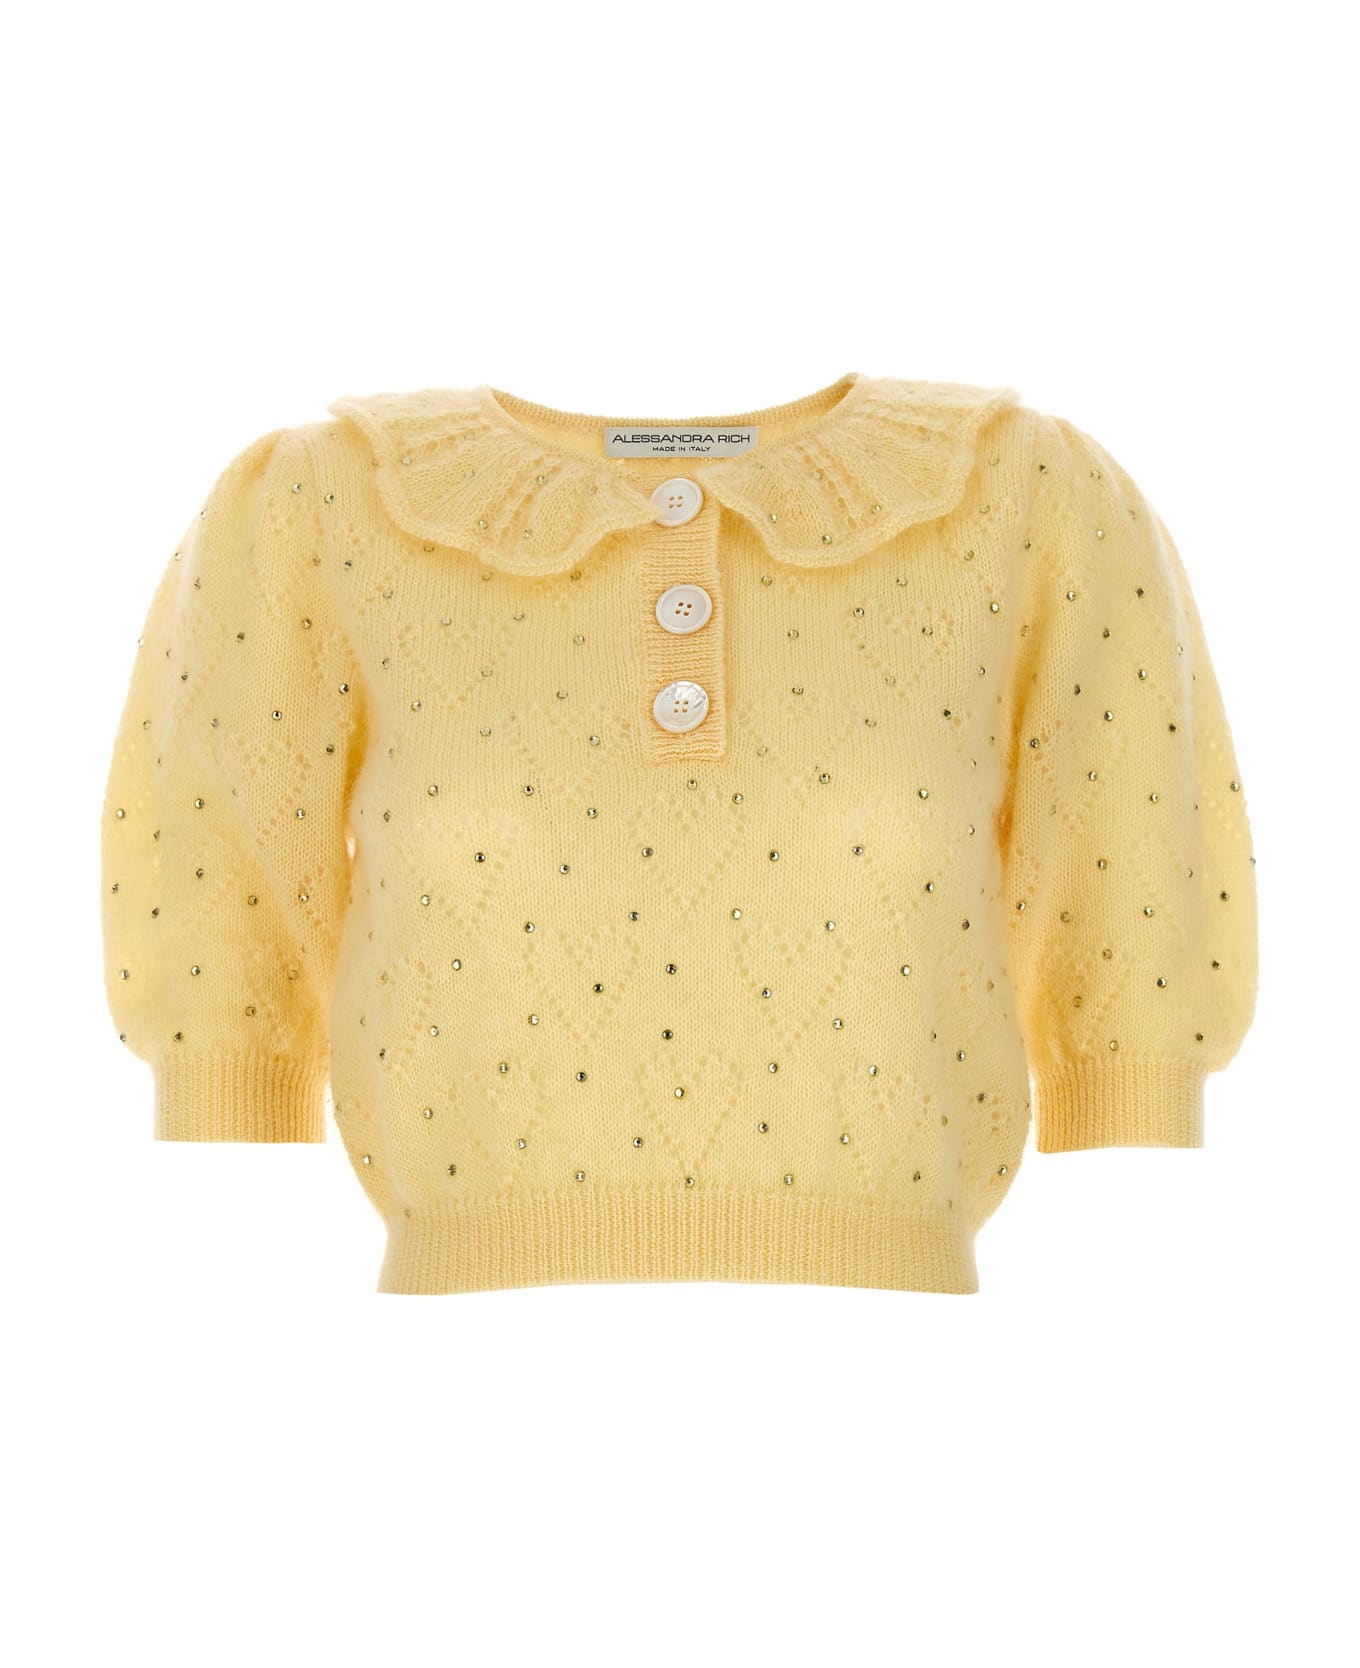 Alessandra Rich Rhinestone Sweater - Yellow